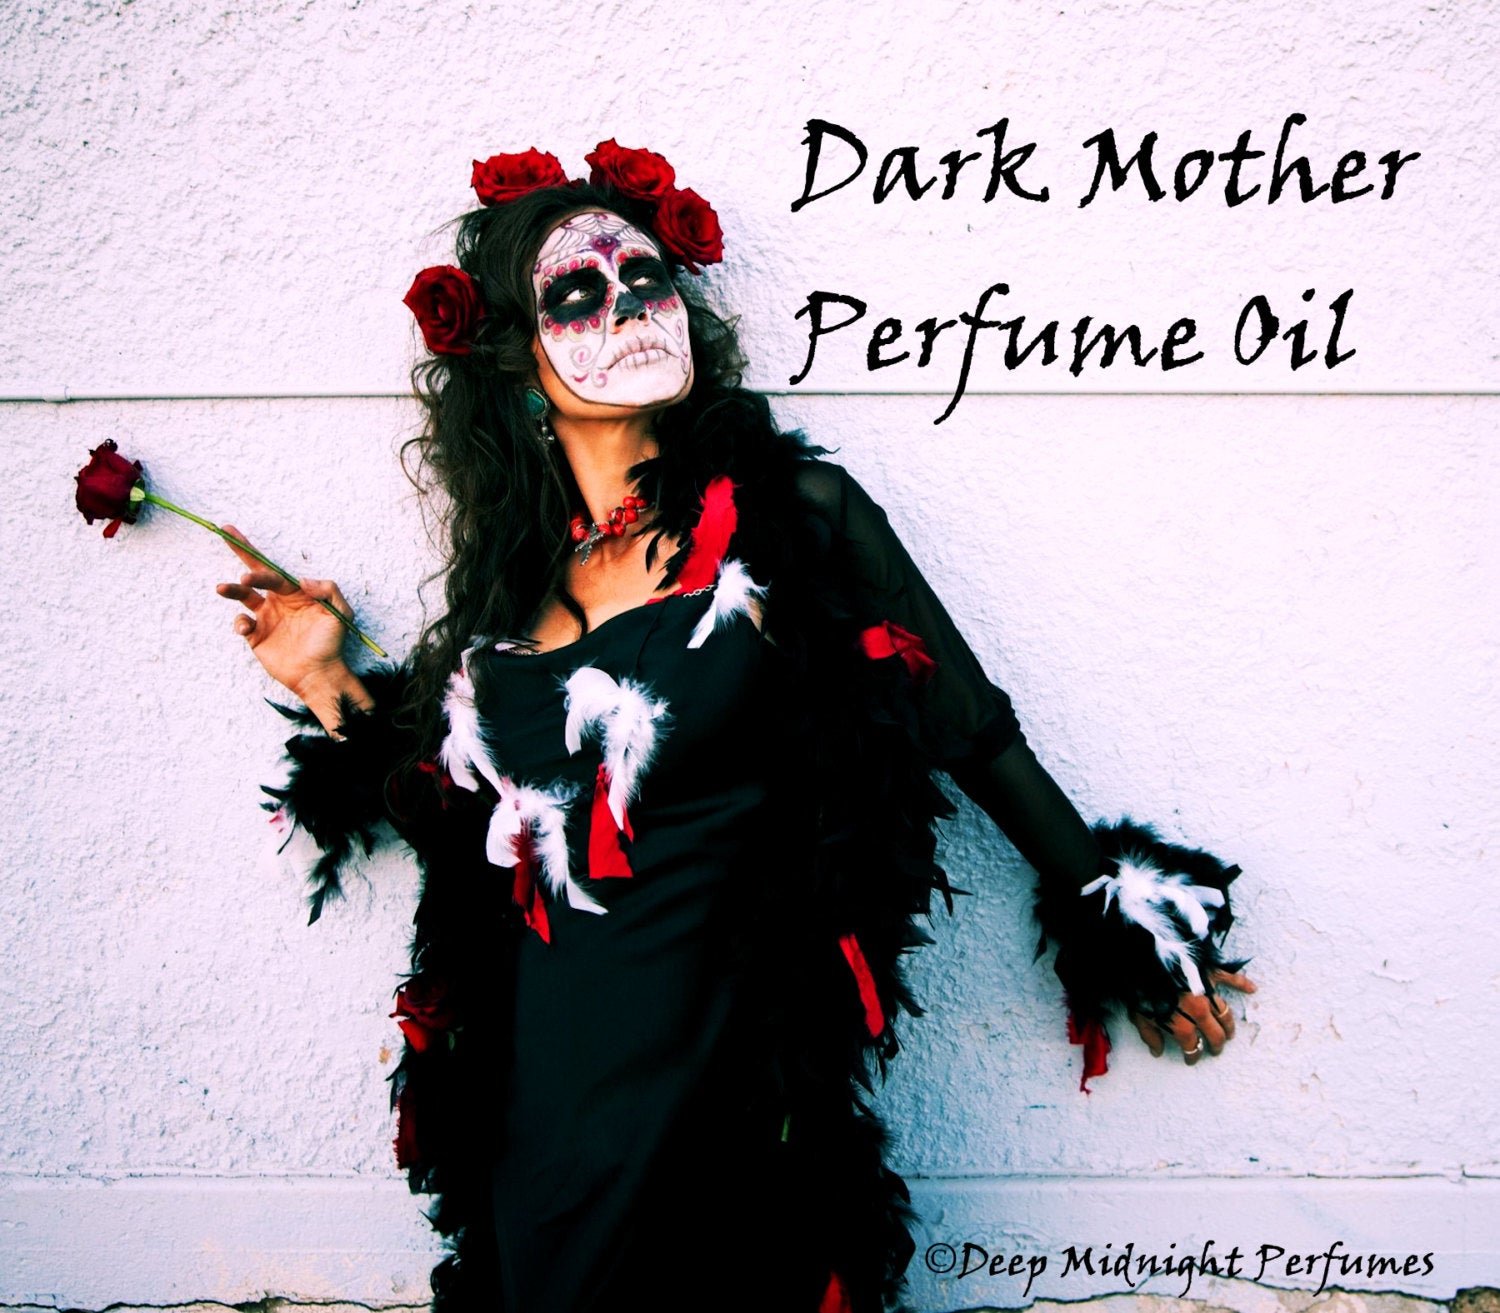 DARK MOTHER™ Perfume Oil - Tobacco, Rum, Vanilla, Musk, Milk - Gothic Perfume Oil - Day of the Dead